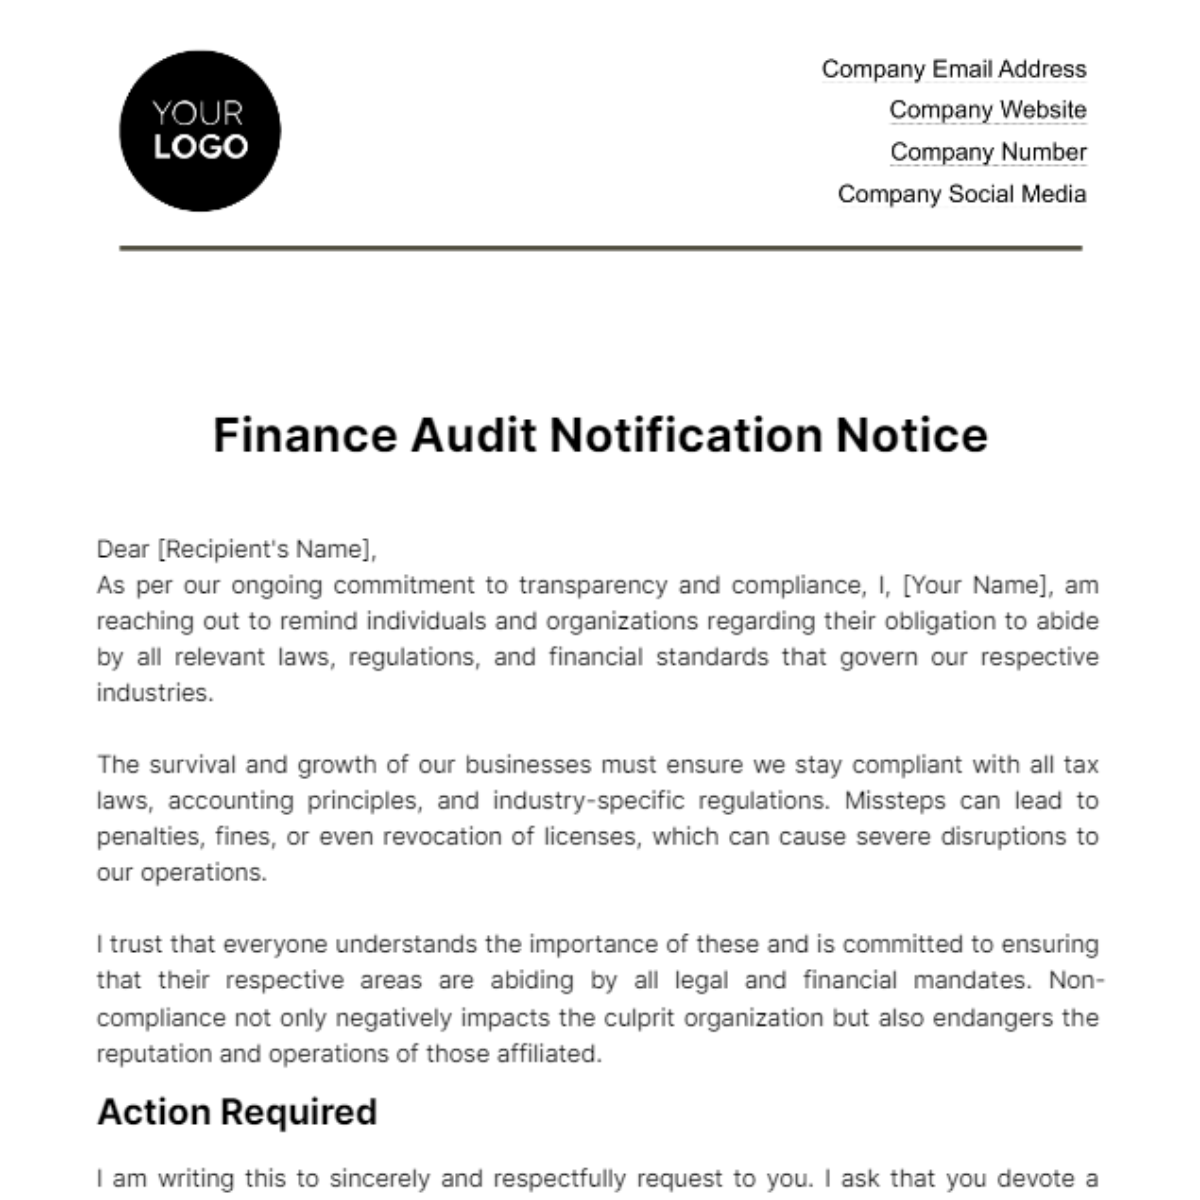 Finance Audit Notification Notice Template